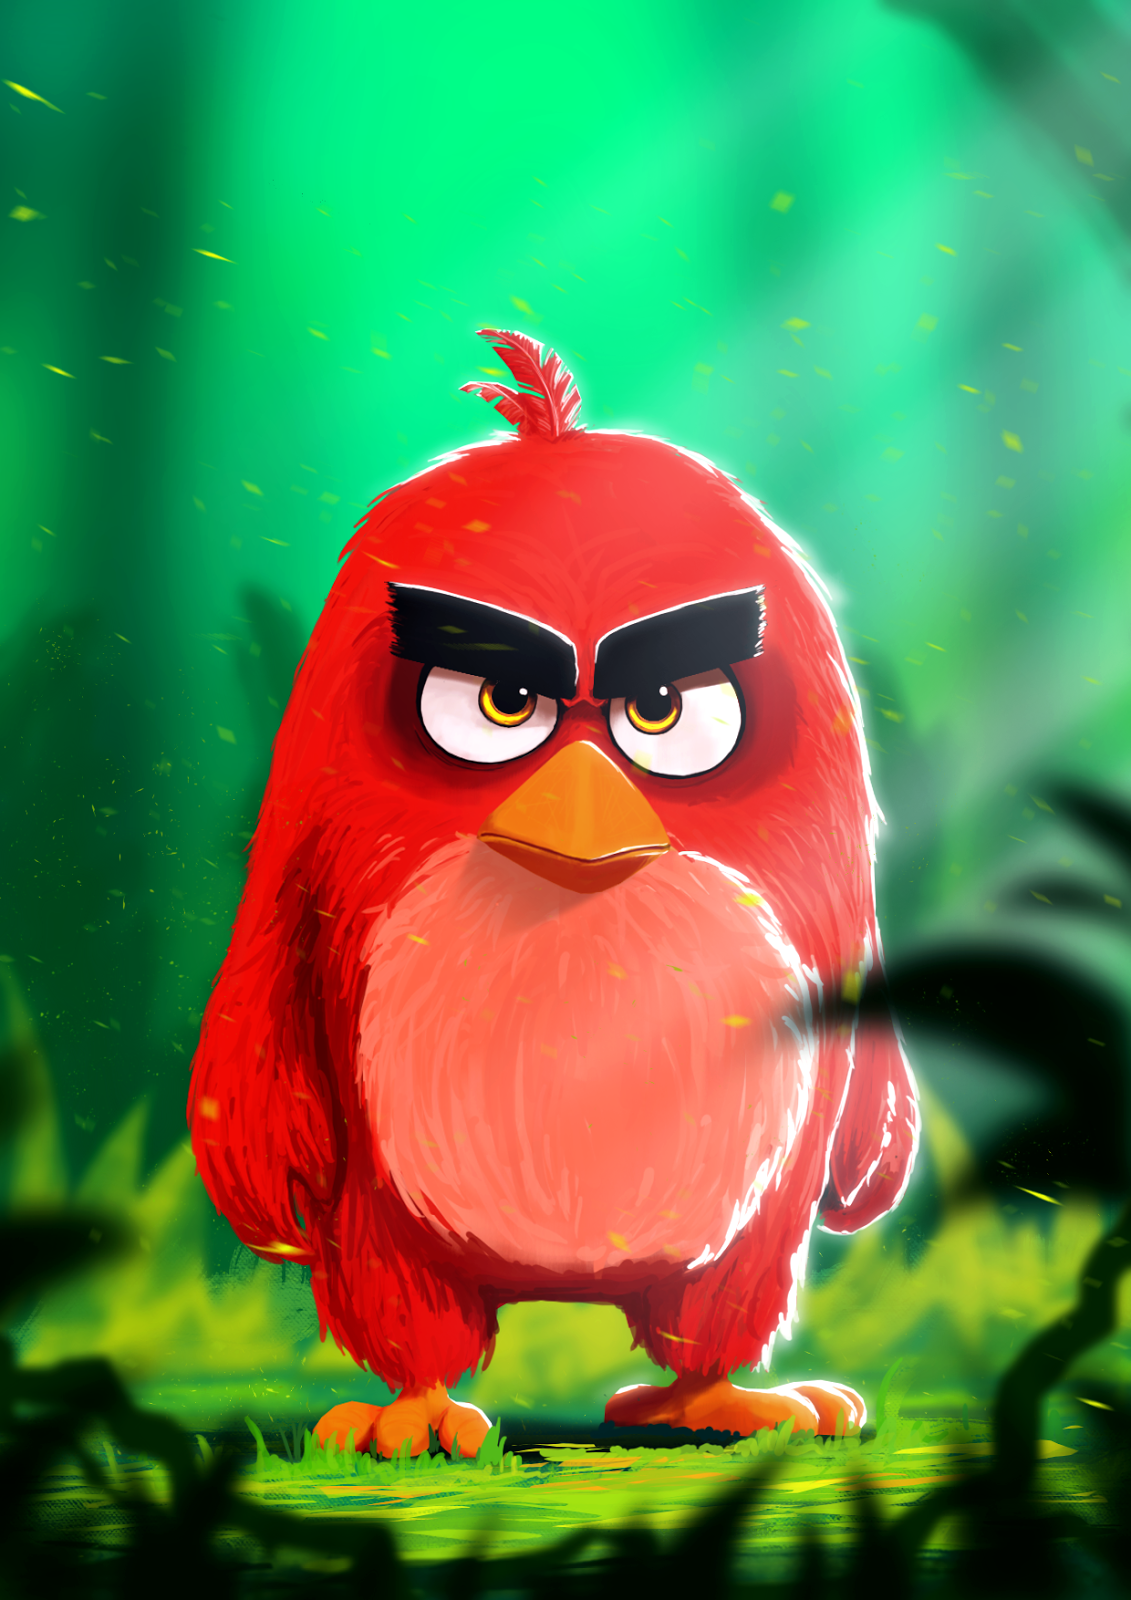 Bird 4pda. Энгри бердз 2 ред. Птенчик Angry Birds 2. Angry Birds красная птичка. Angry Birds 2 красная птица.